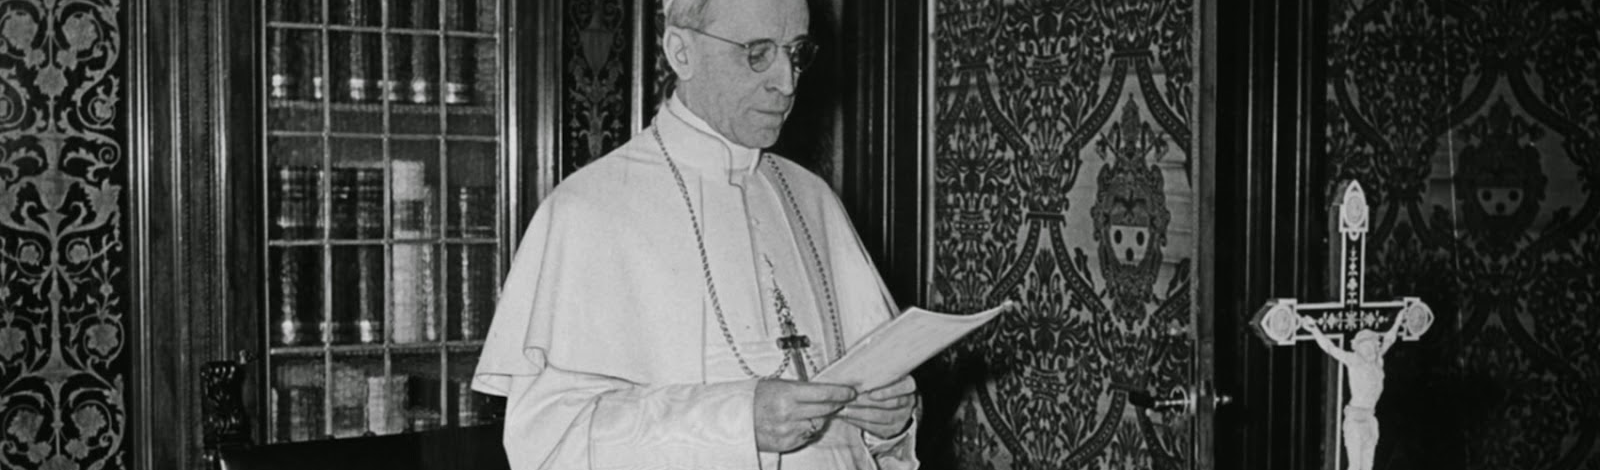 Papa Francisco ordena abertura dos polêmicos arquivos secretos do papa Pio XII